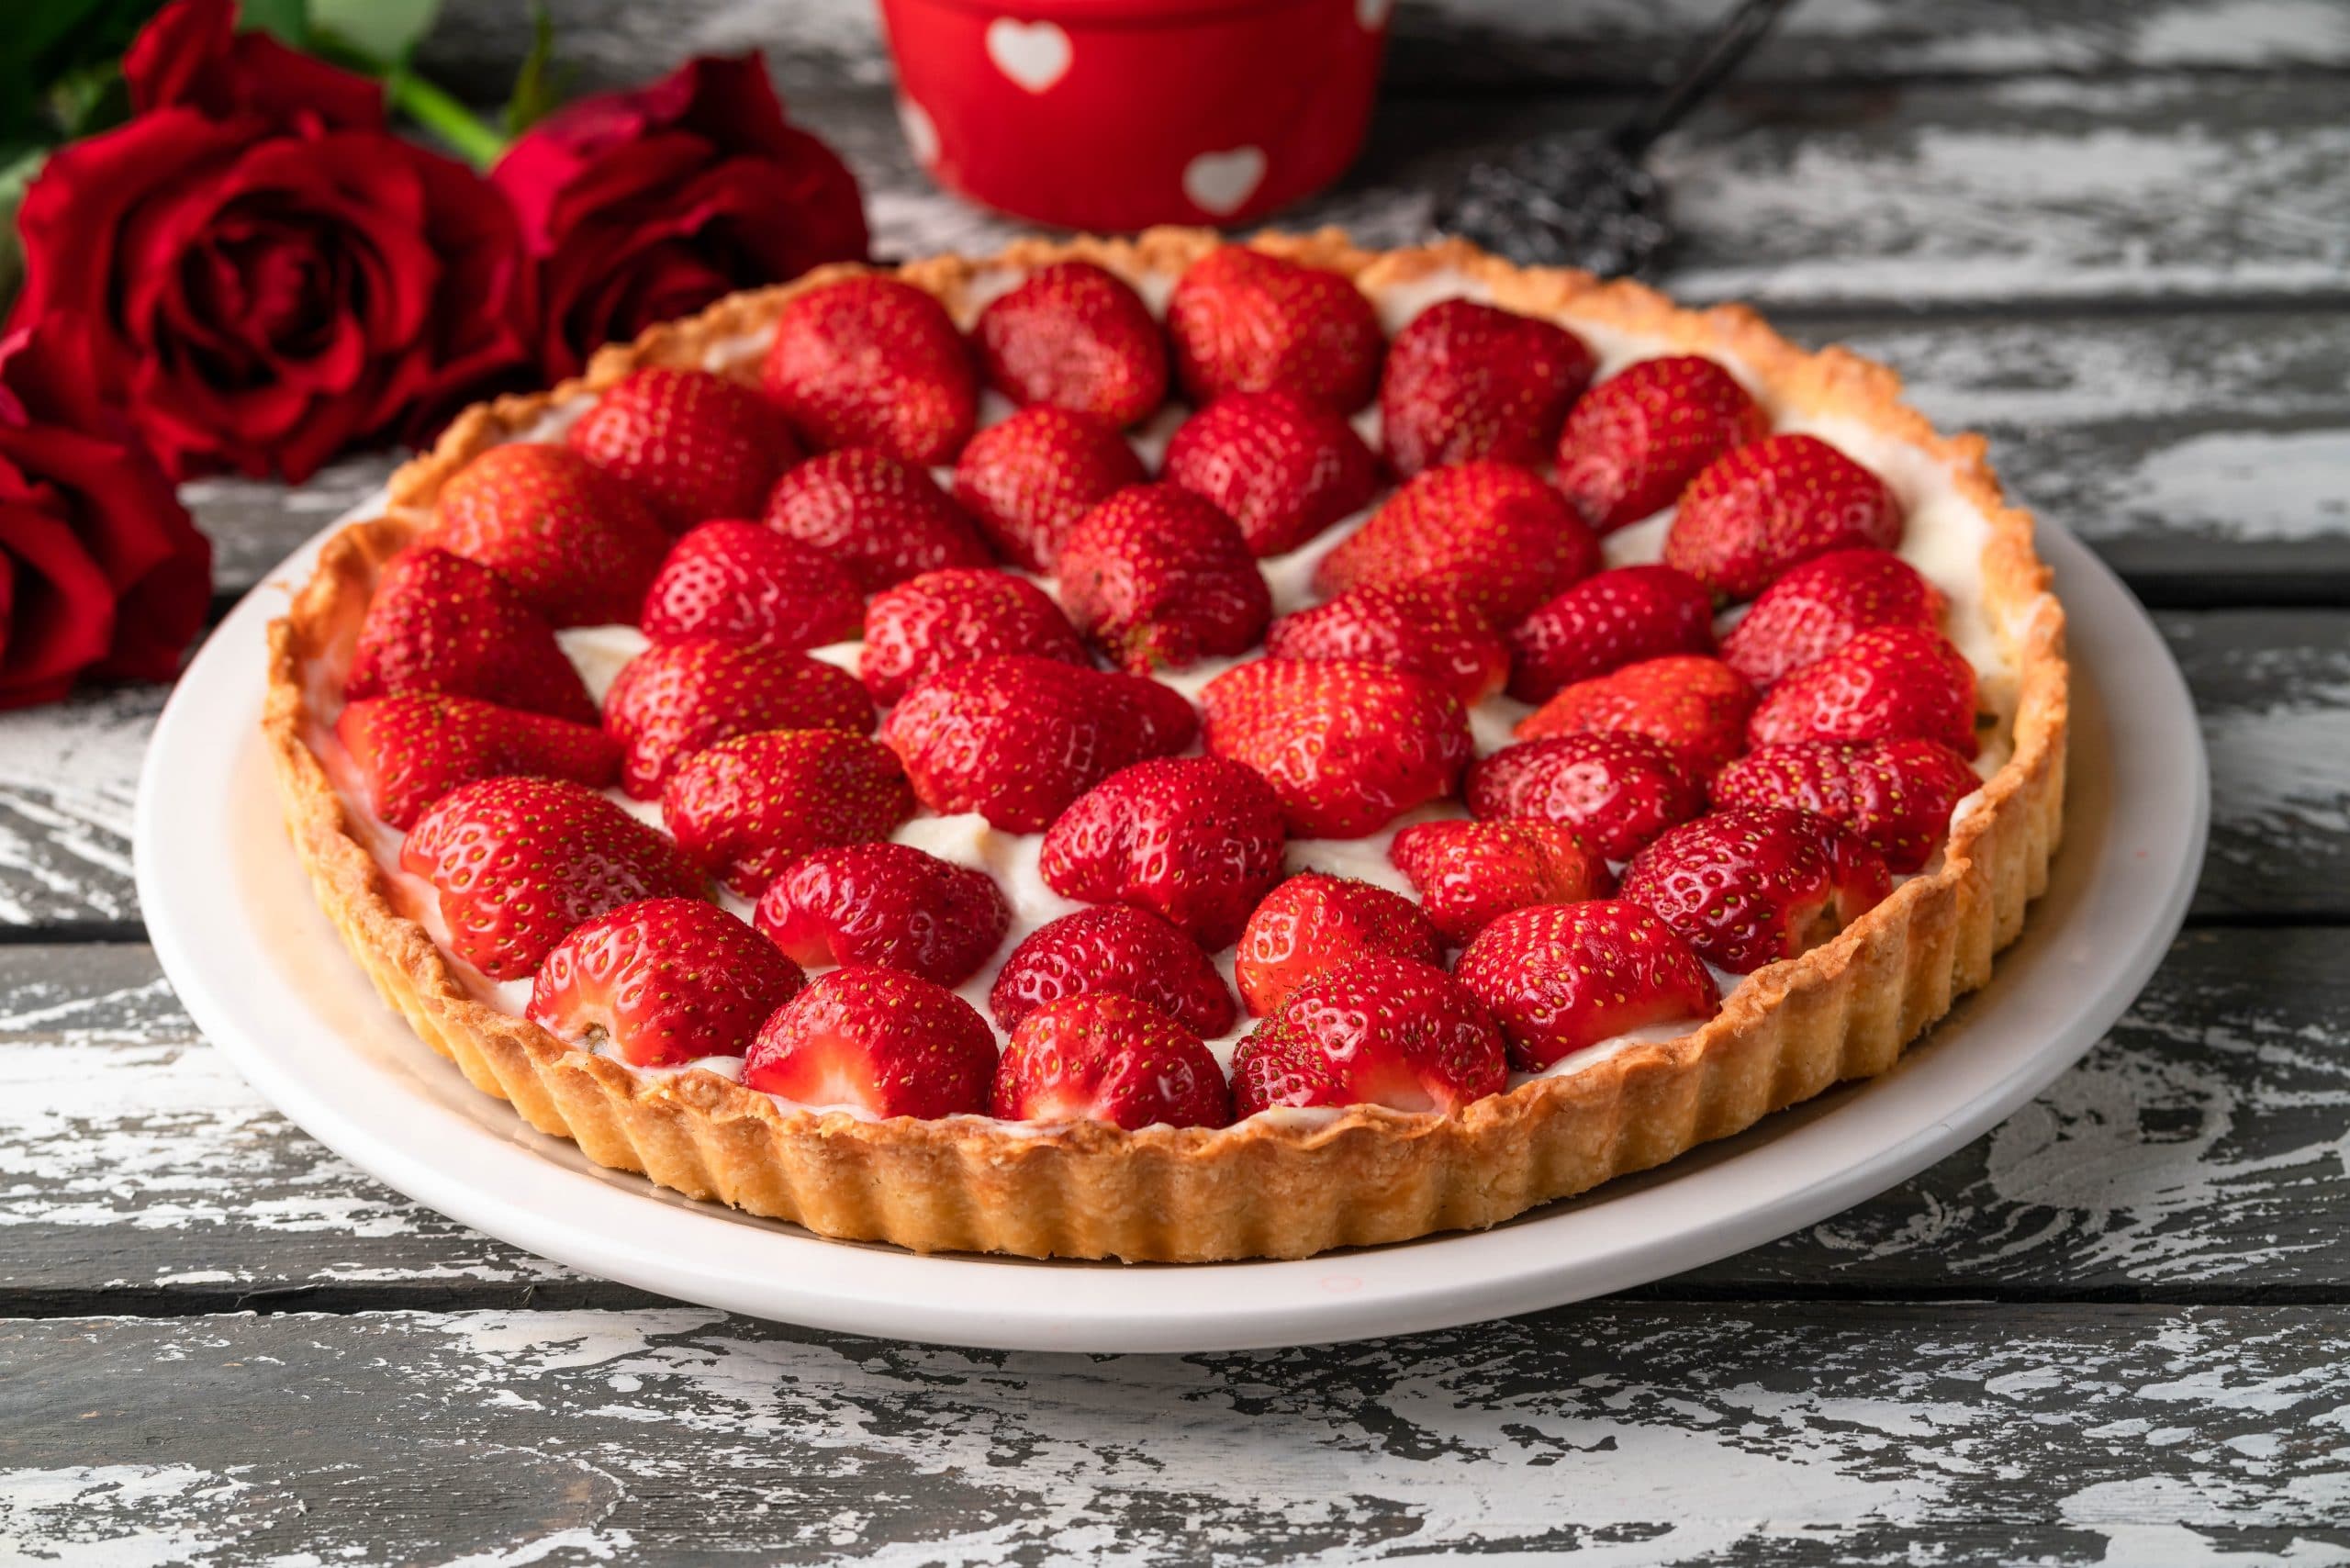 Strawberry Desserts Blog Image. Image du blog desserts aux fraises.